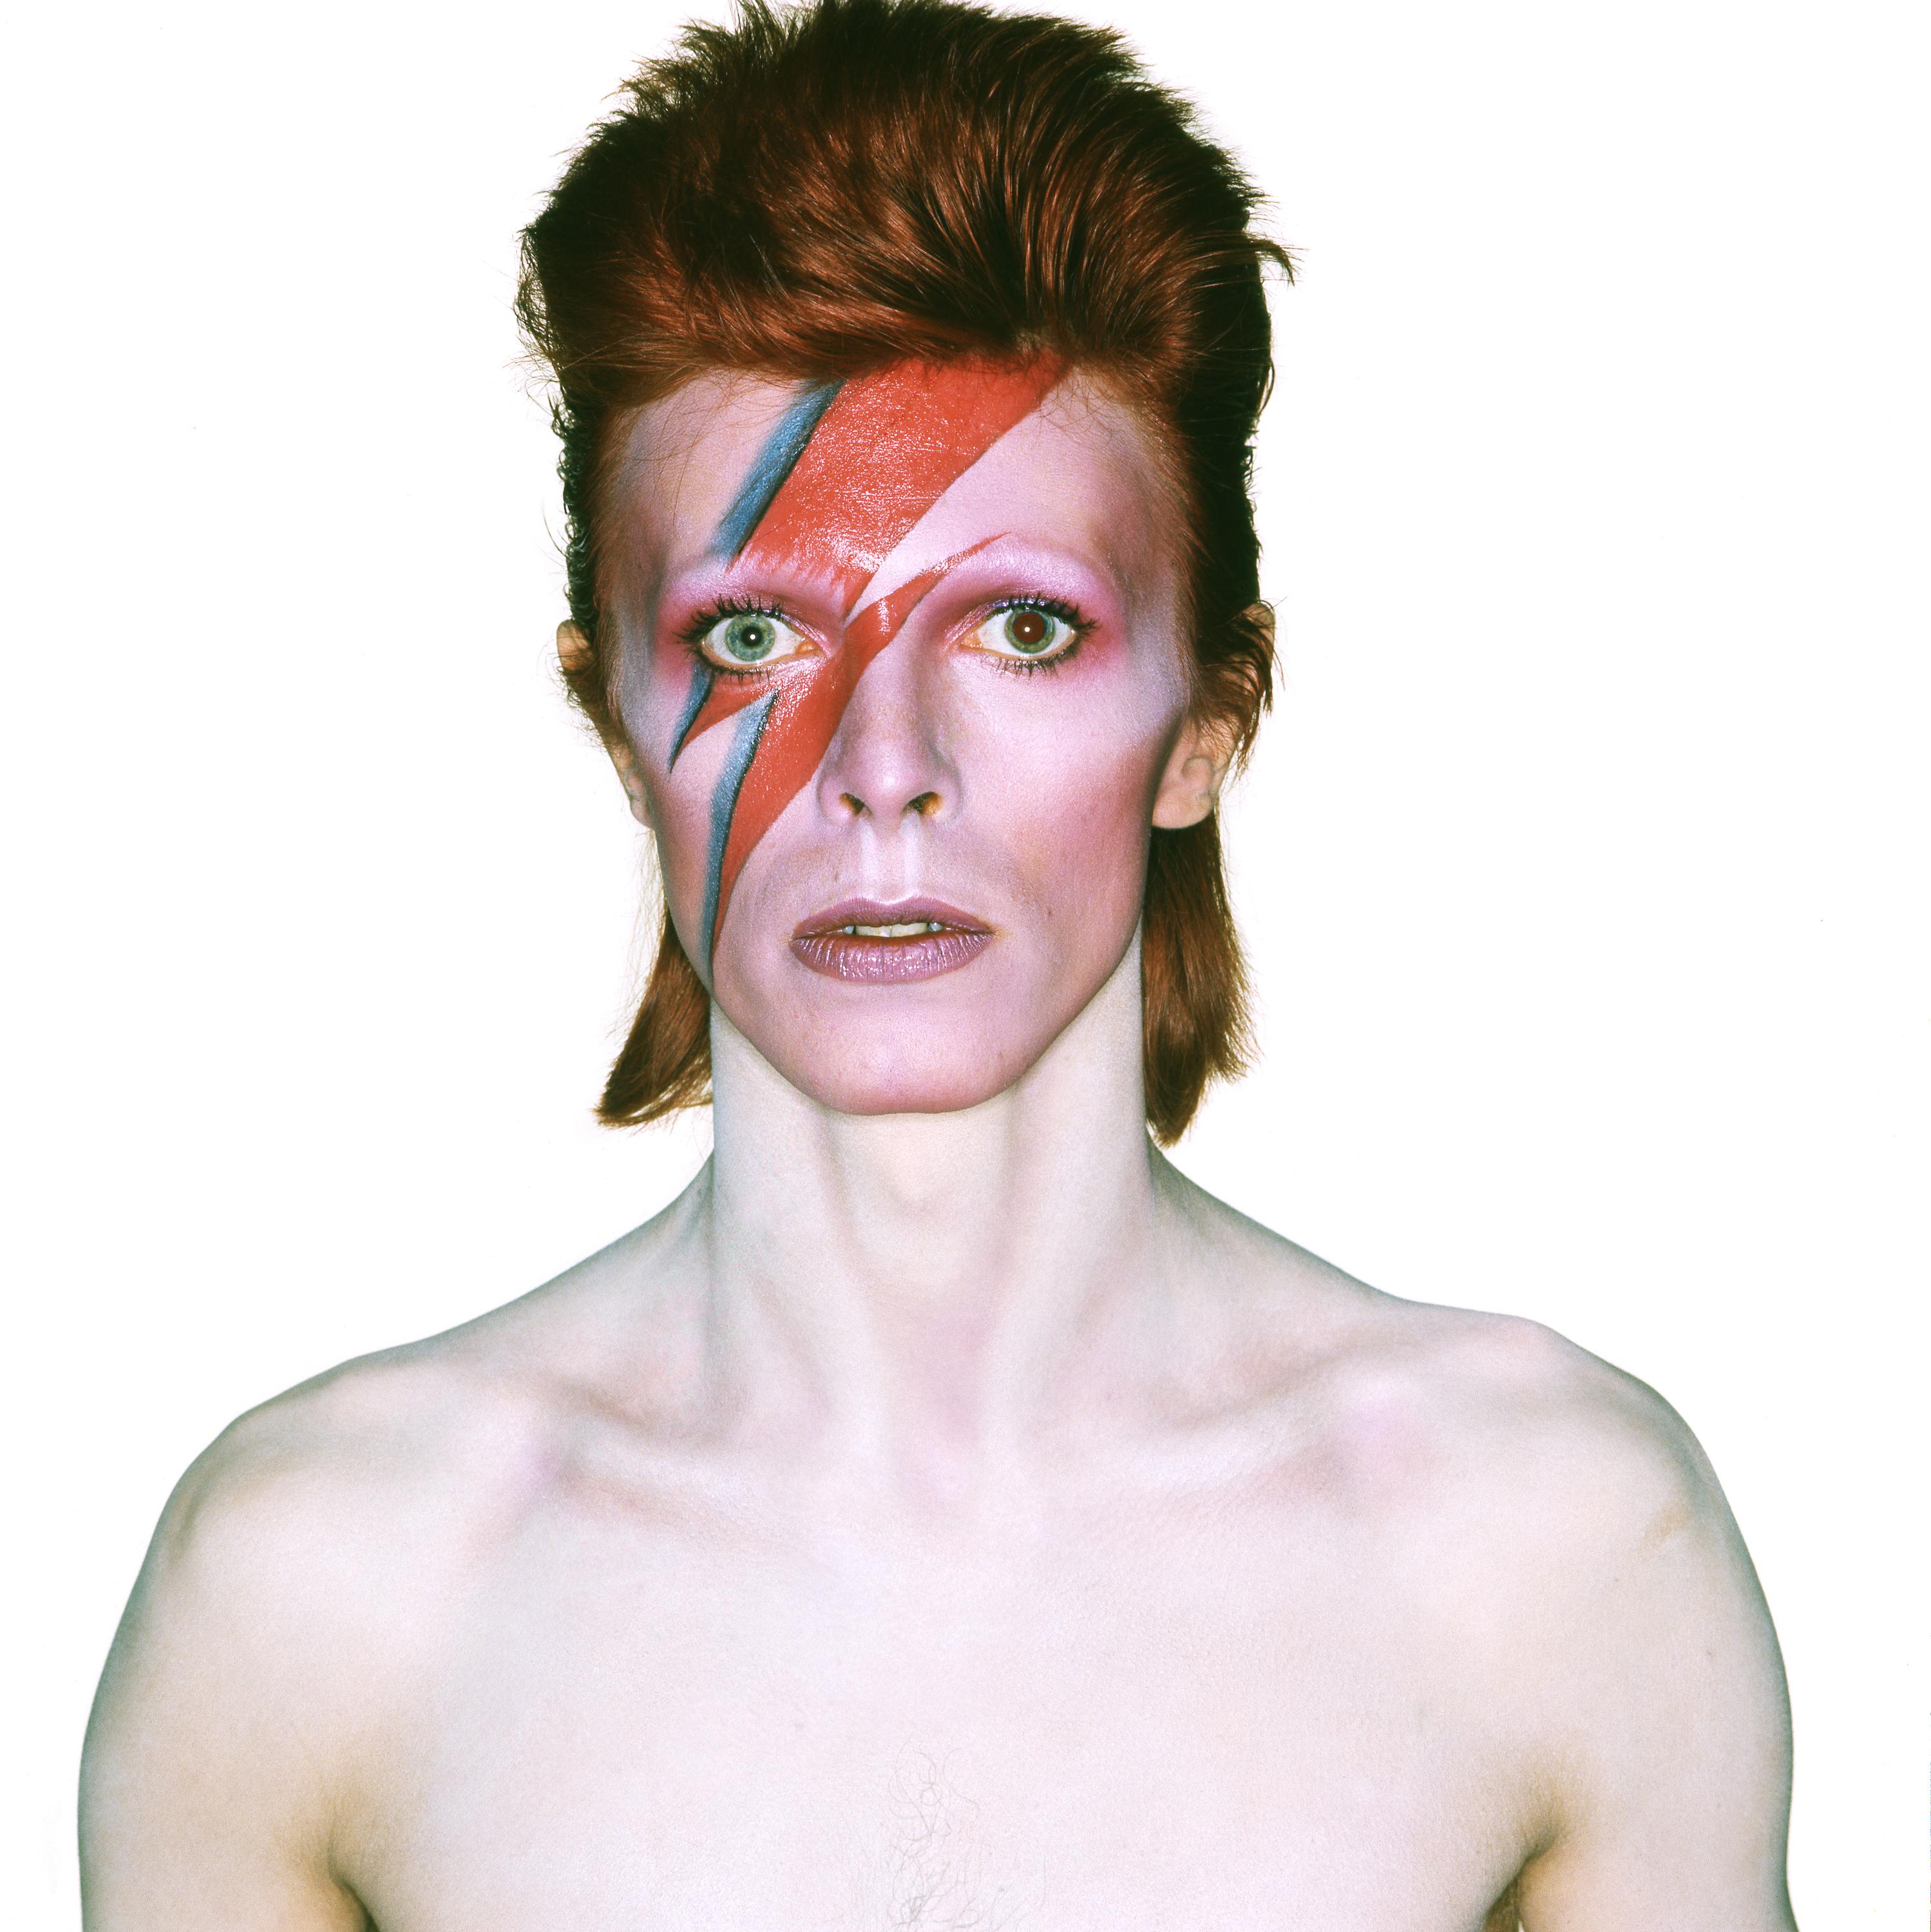 David Bowie Photo Retrospective: Life and Career